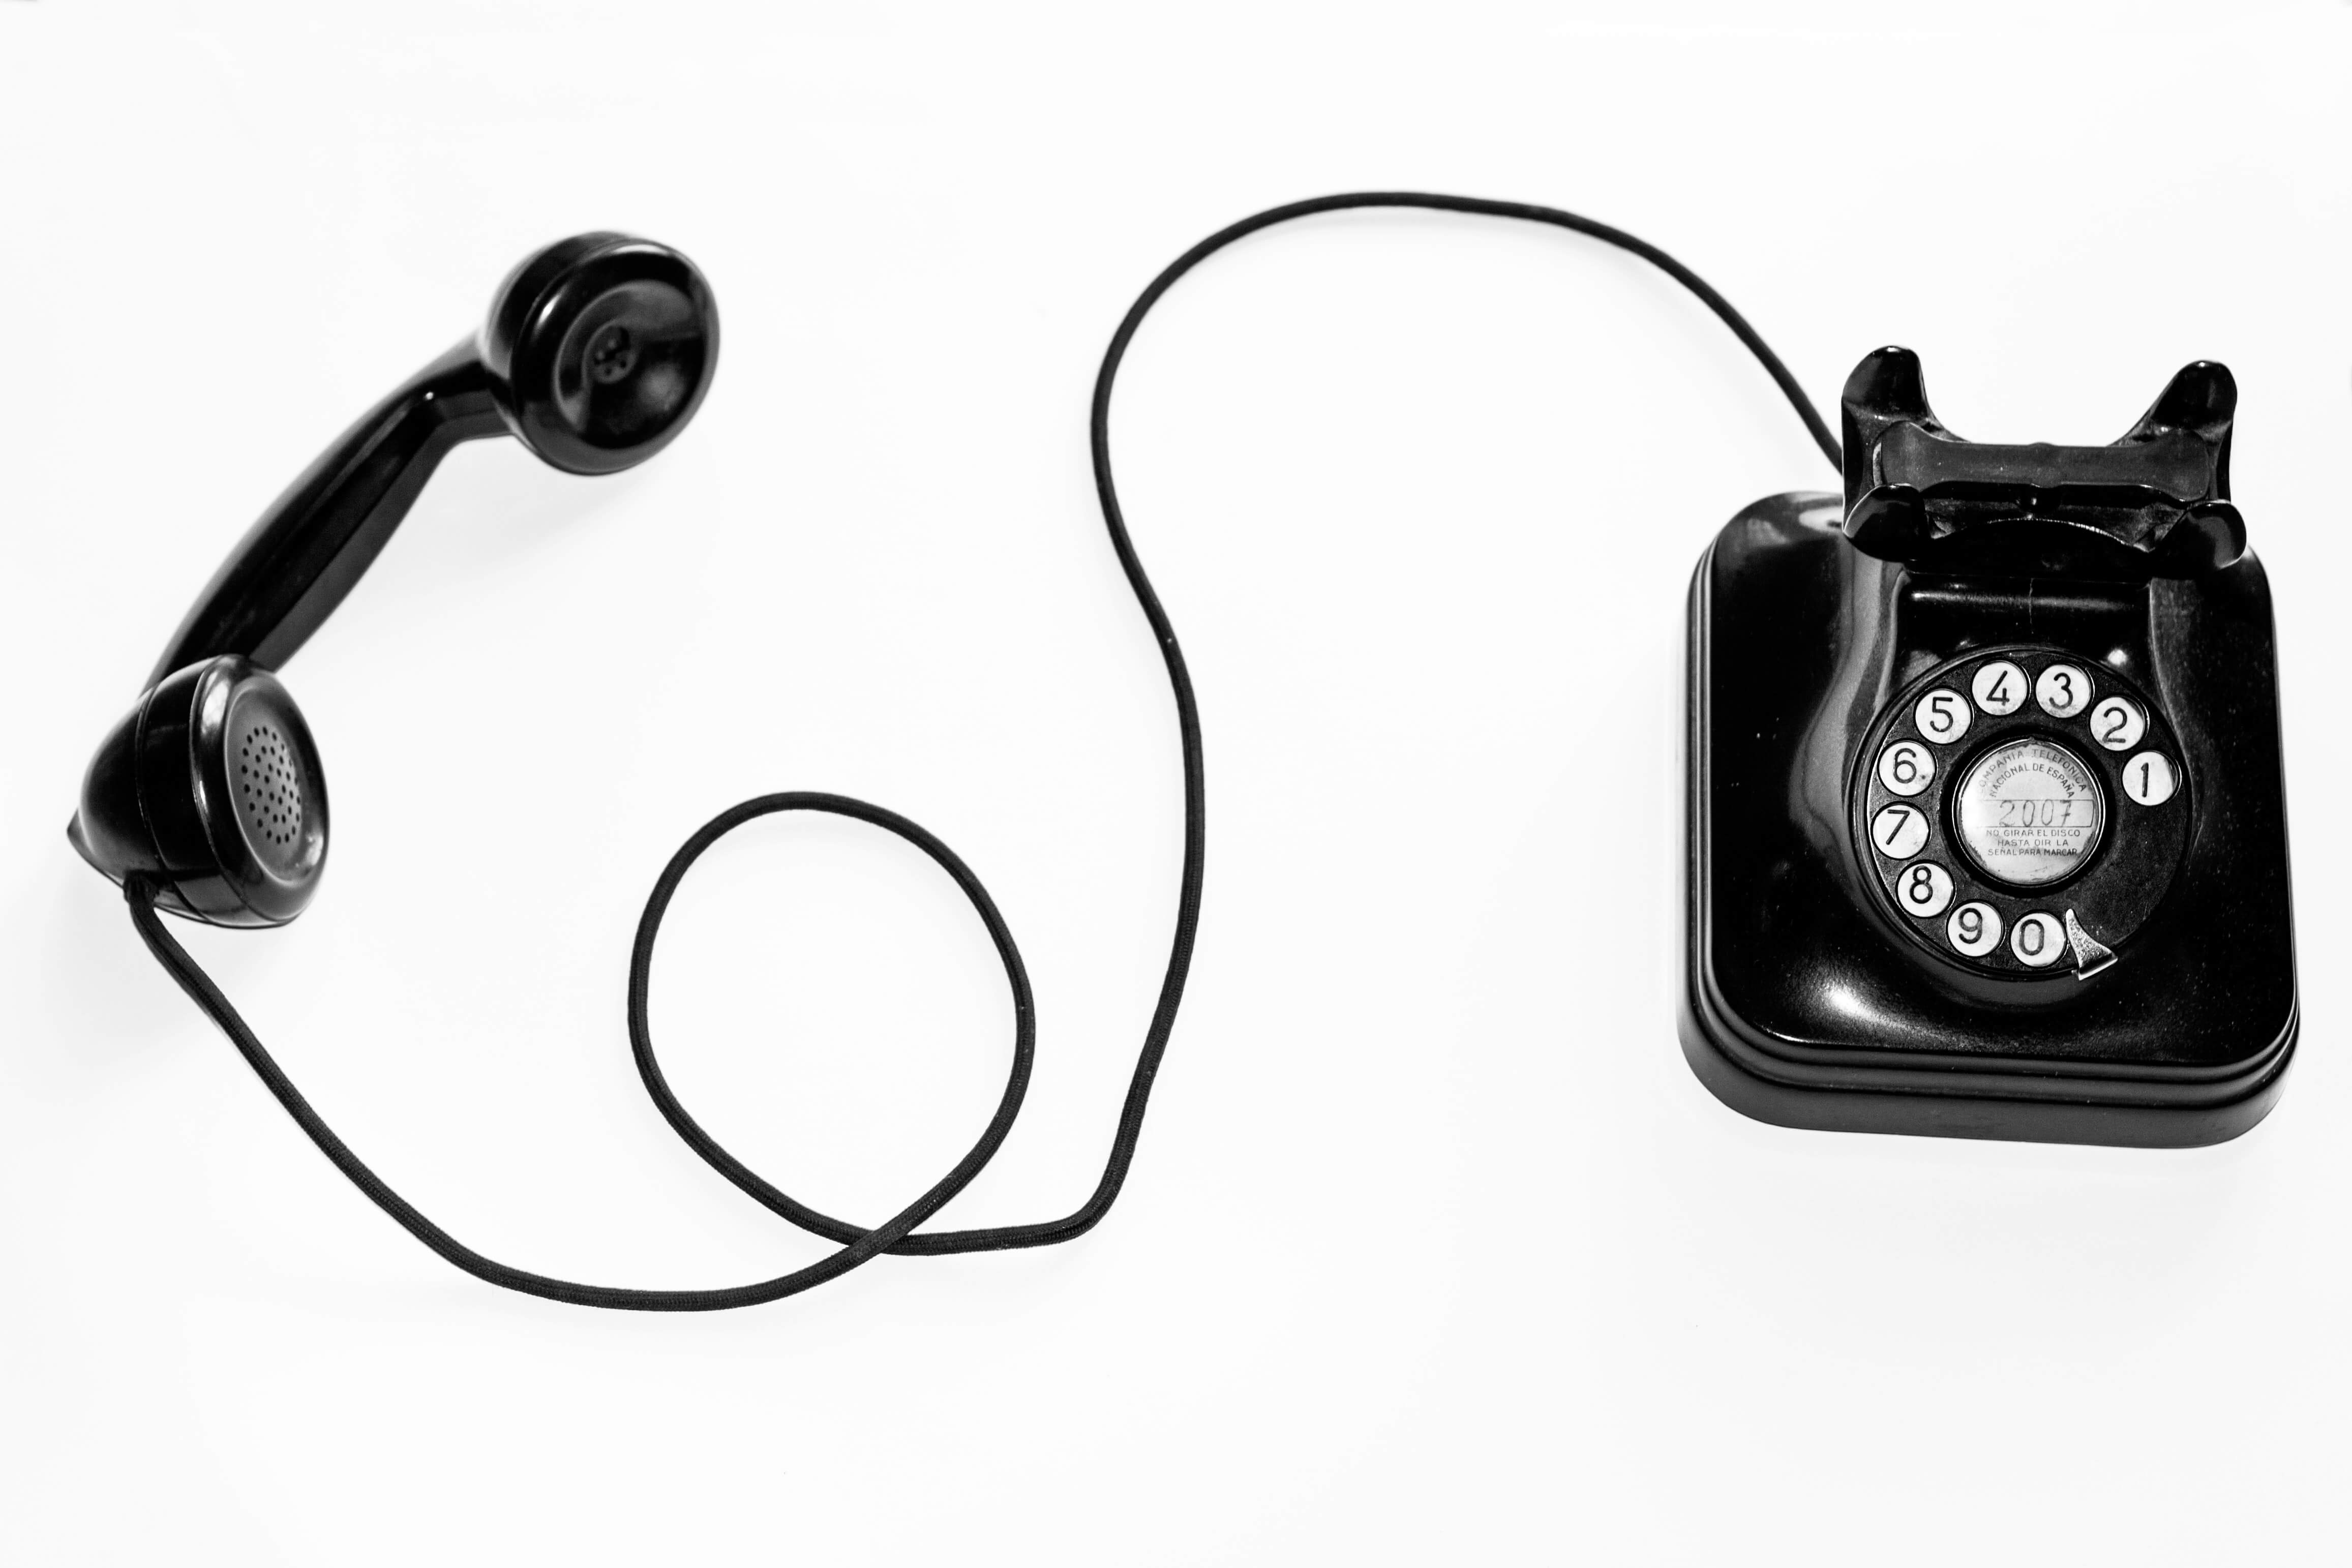 A black rotary phone